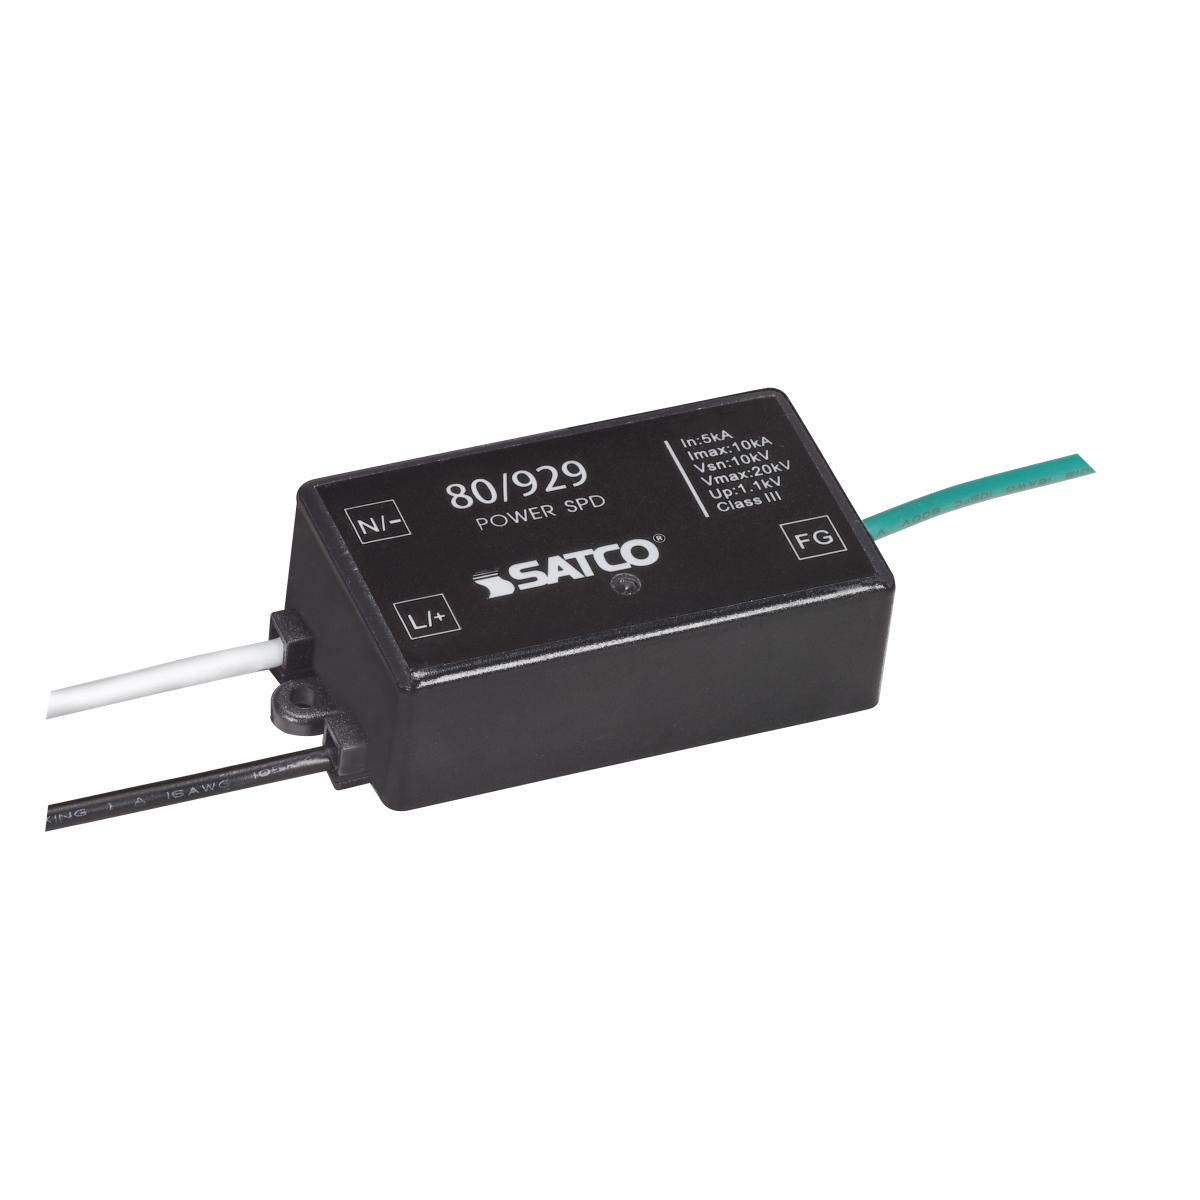 Satco 80-929 LED HID Surge Protector 100-277V AC 10KV Protection Level